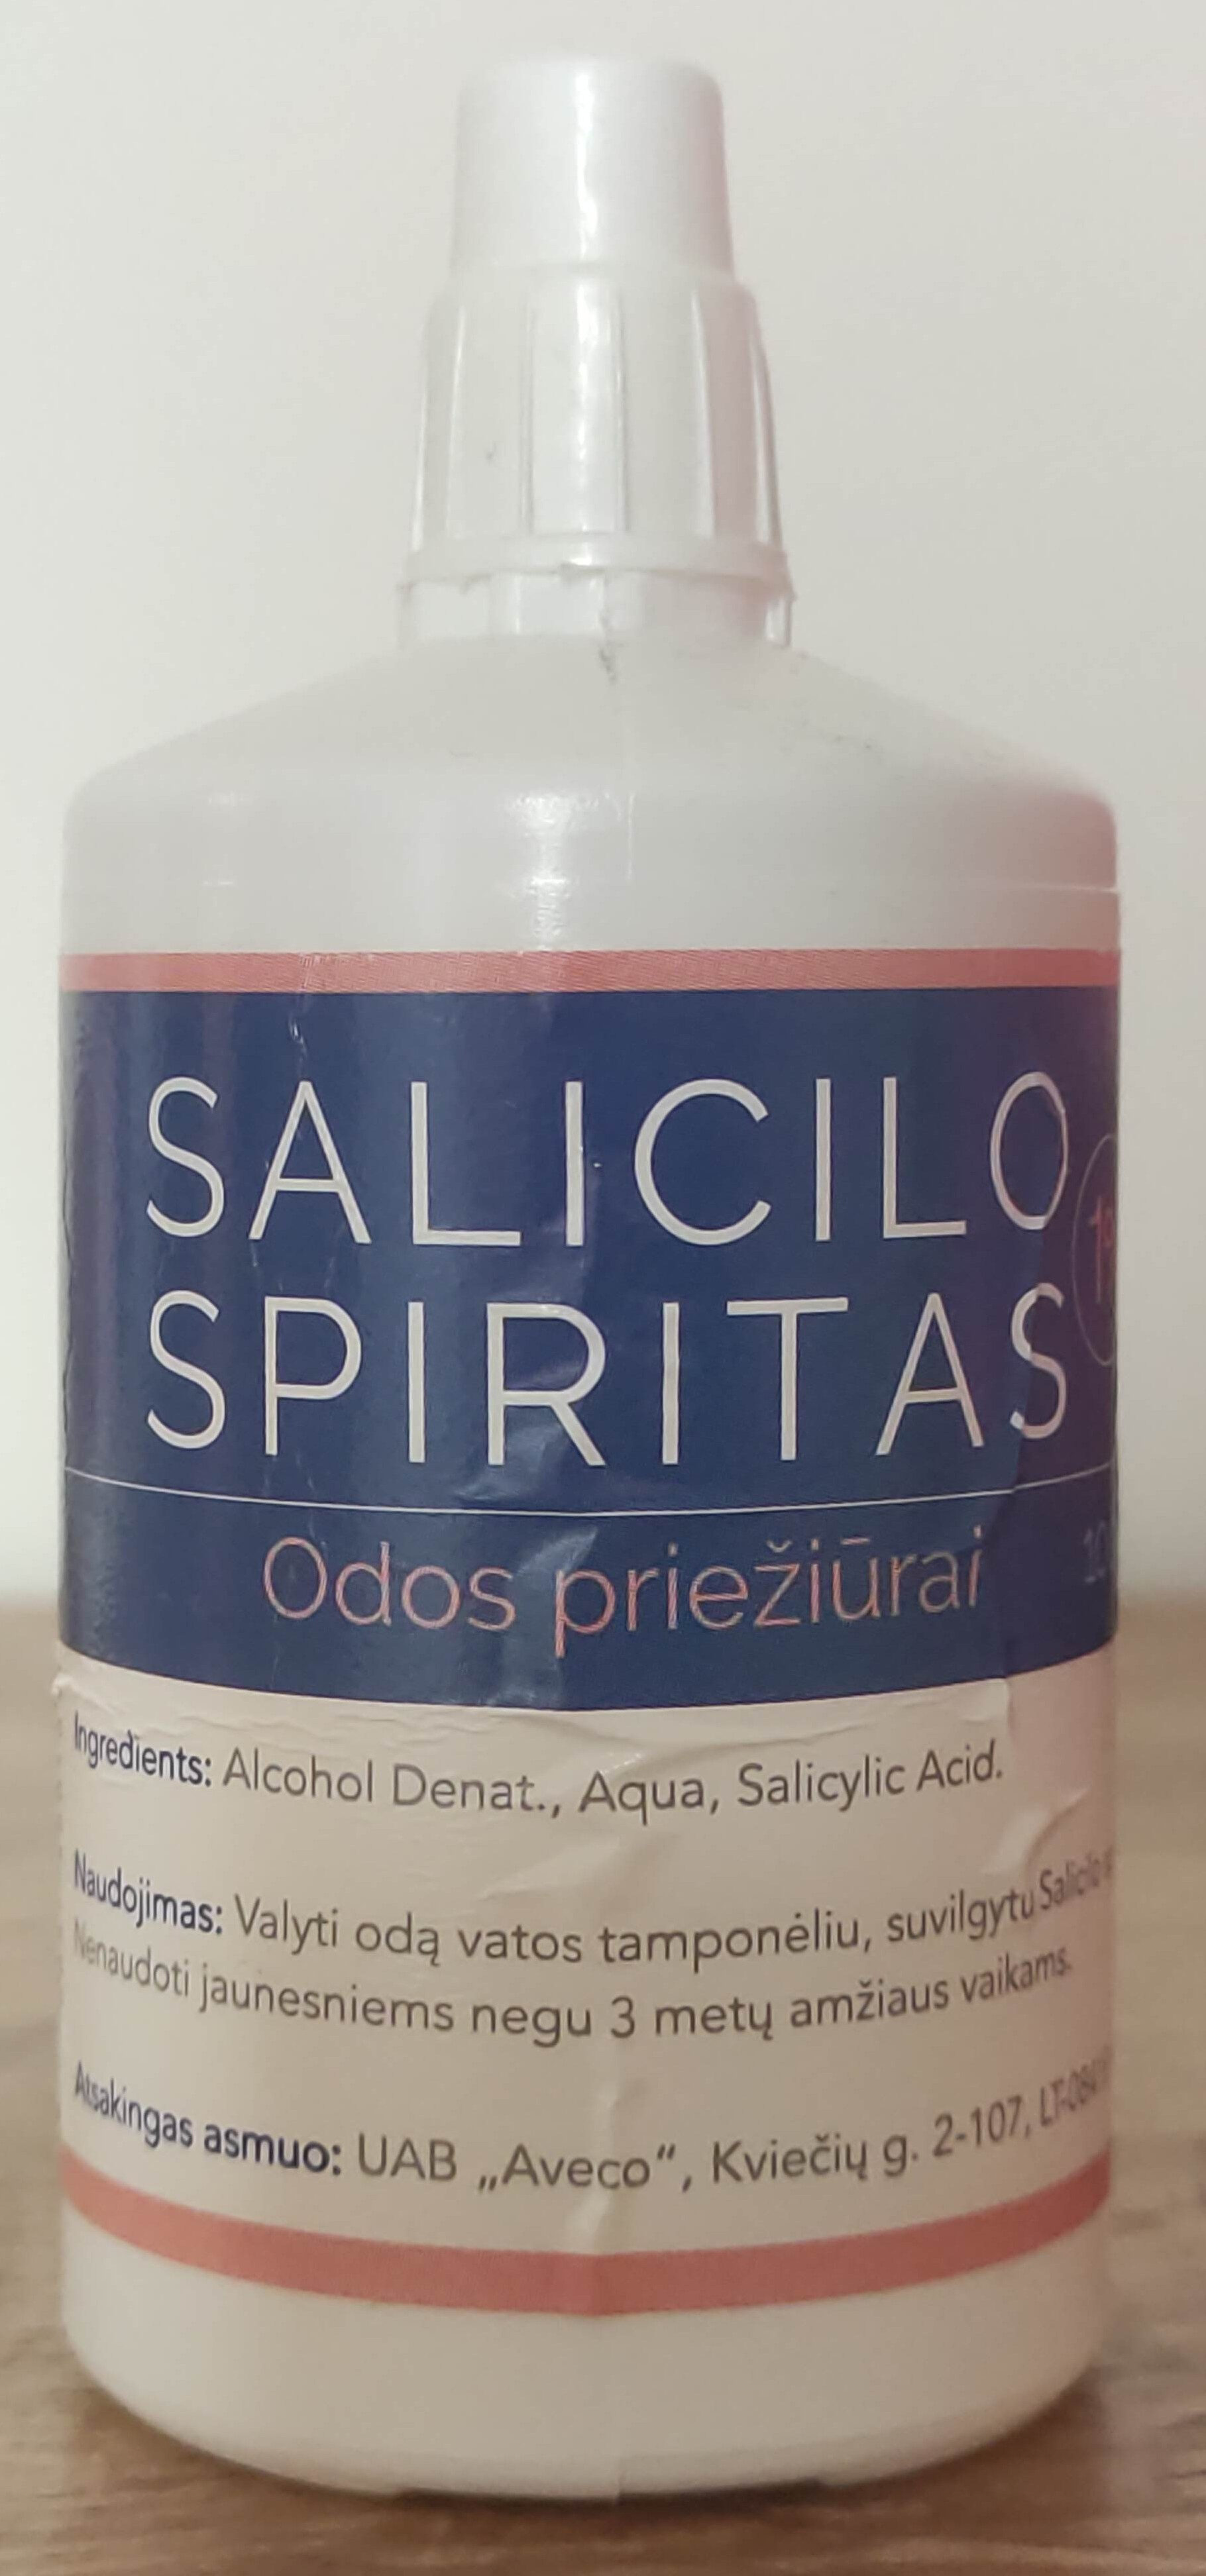 Salicilo spiritas - Produkt - lt